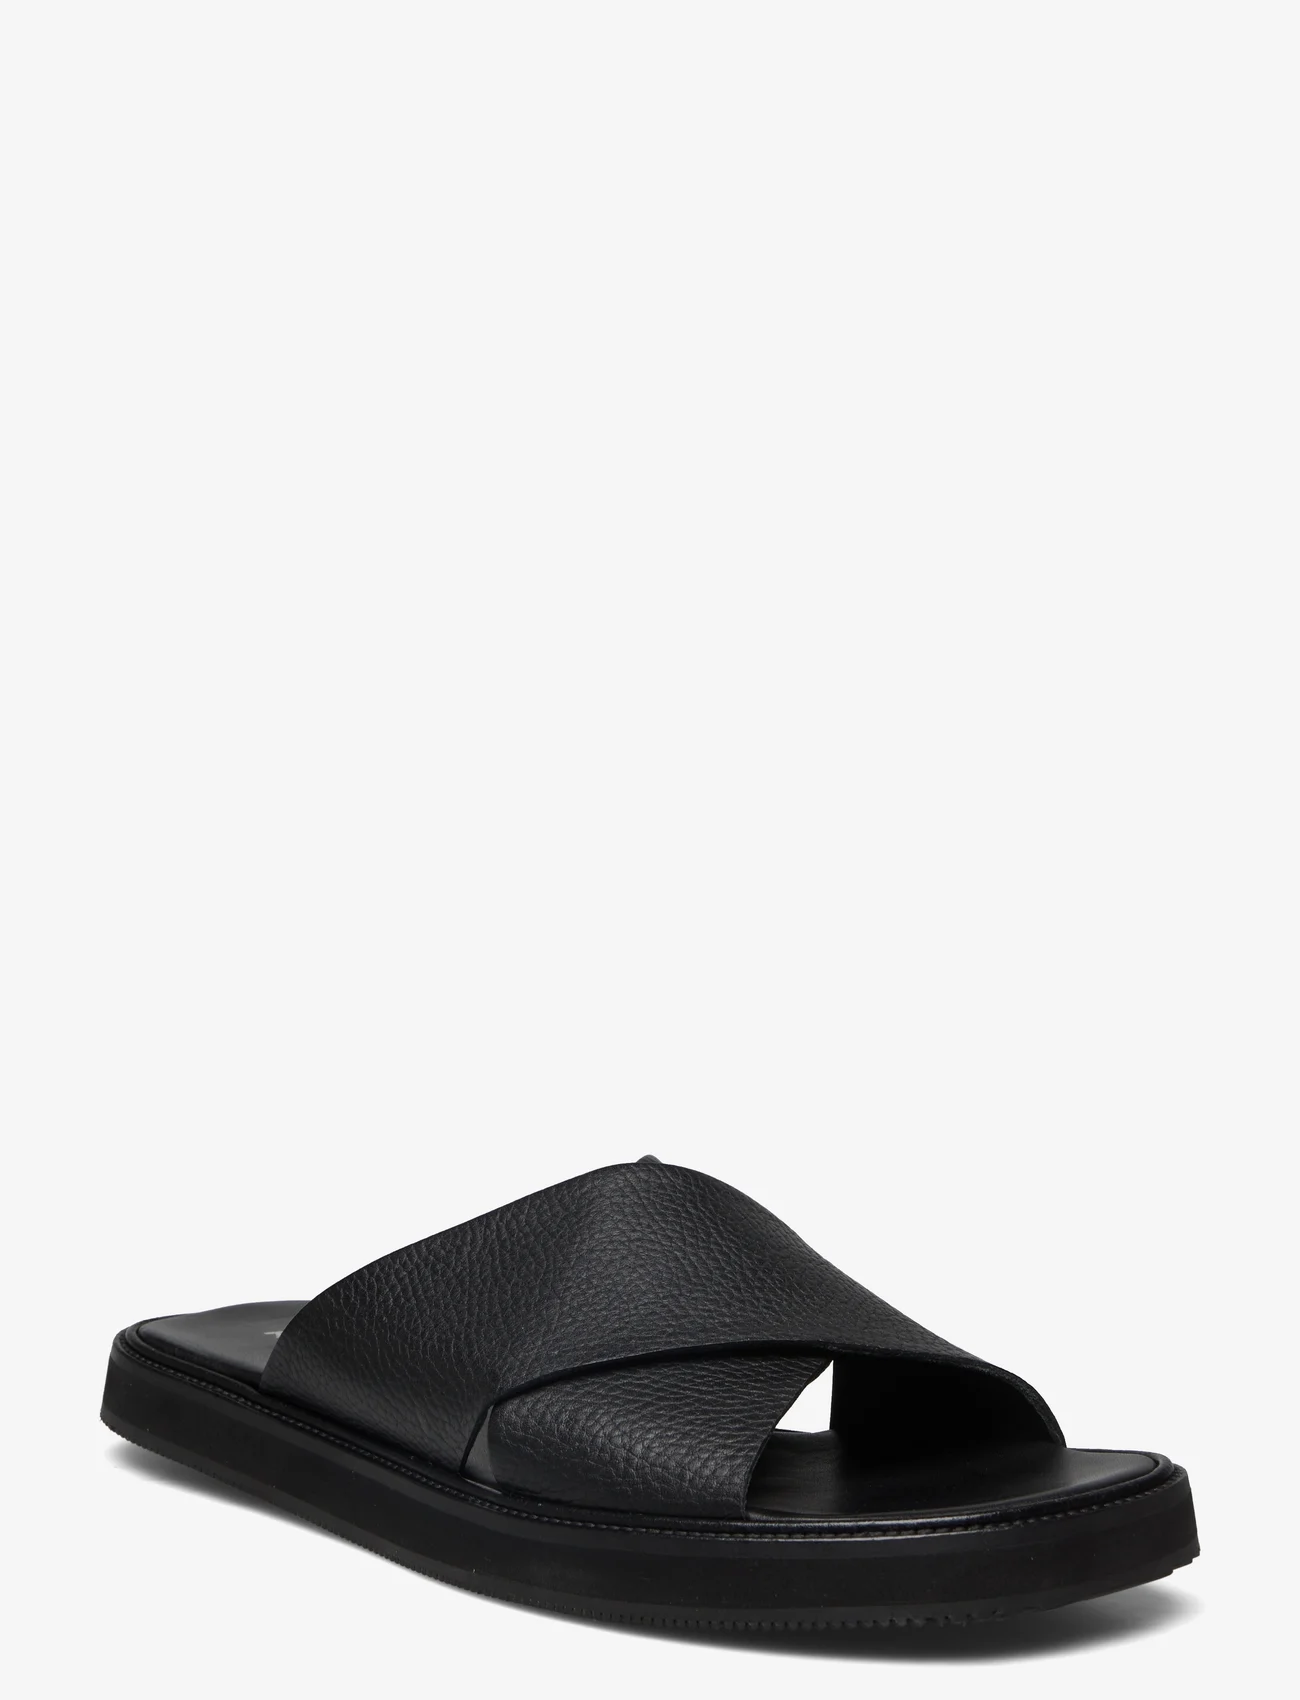 ANGULUS - Sandals - flat - open toe - op - sandals - 1604/2504 black/black - 0